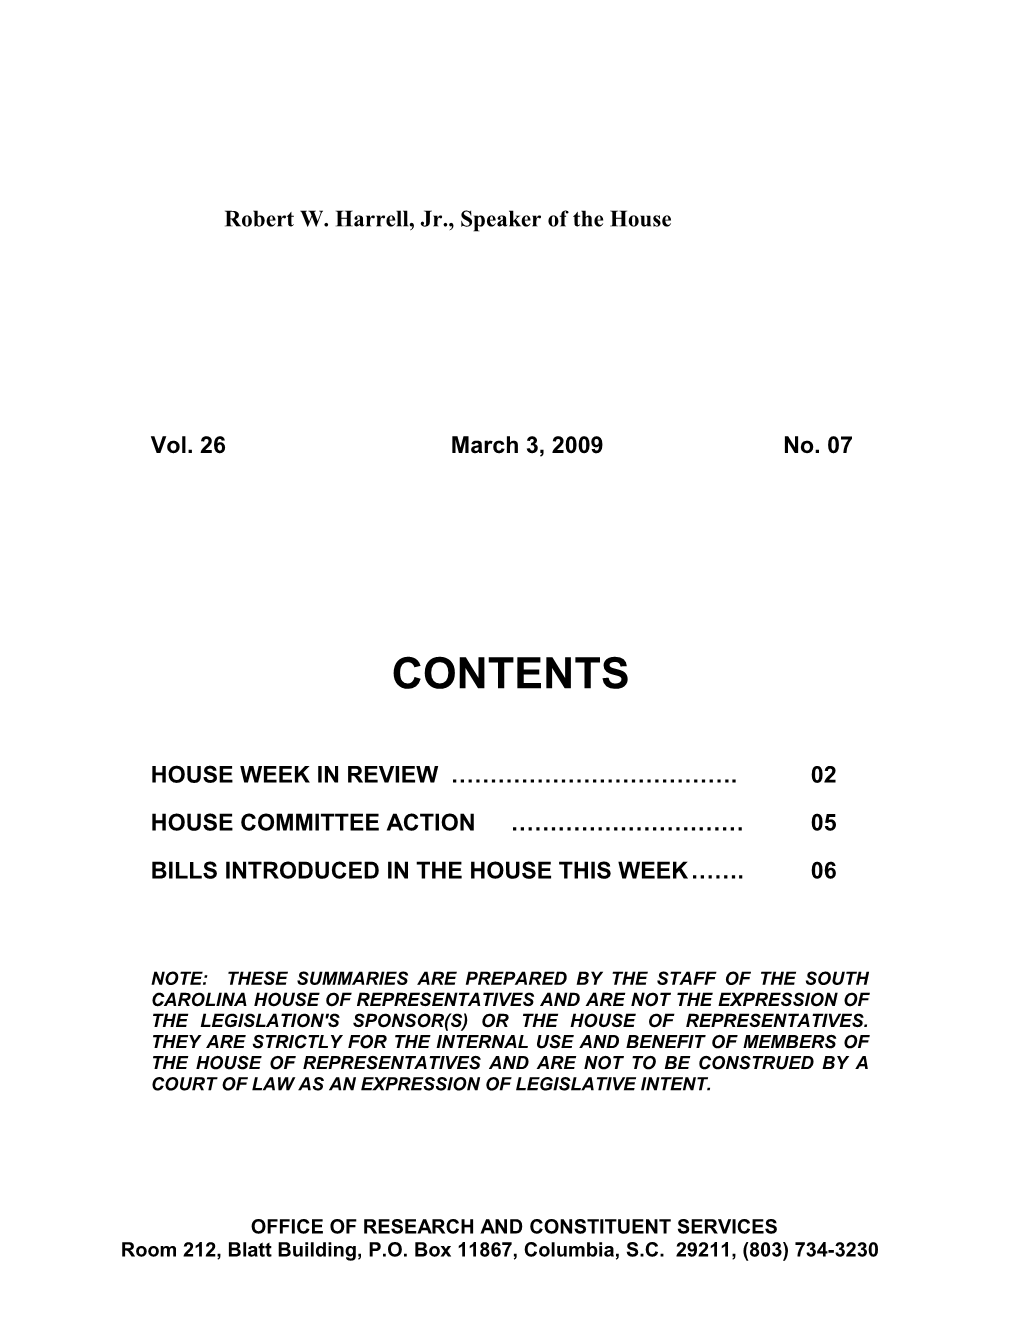 Legislative Update - Vol. 26 No. 07 March 3, 2009 - South Carolina Legislature Online